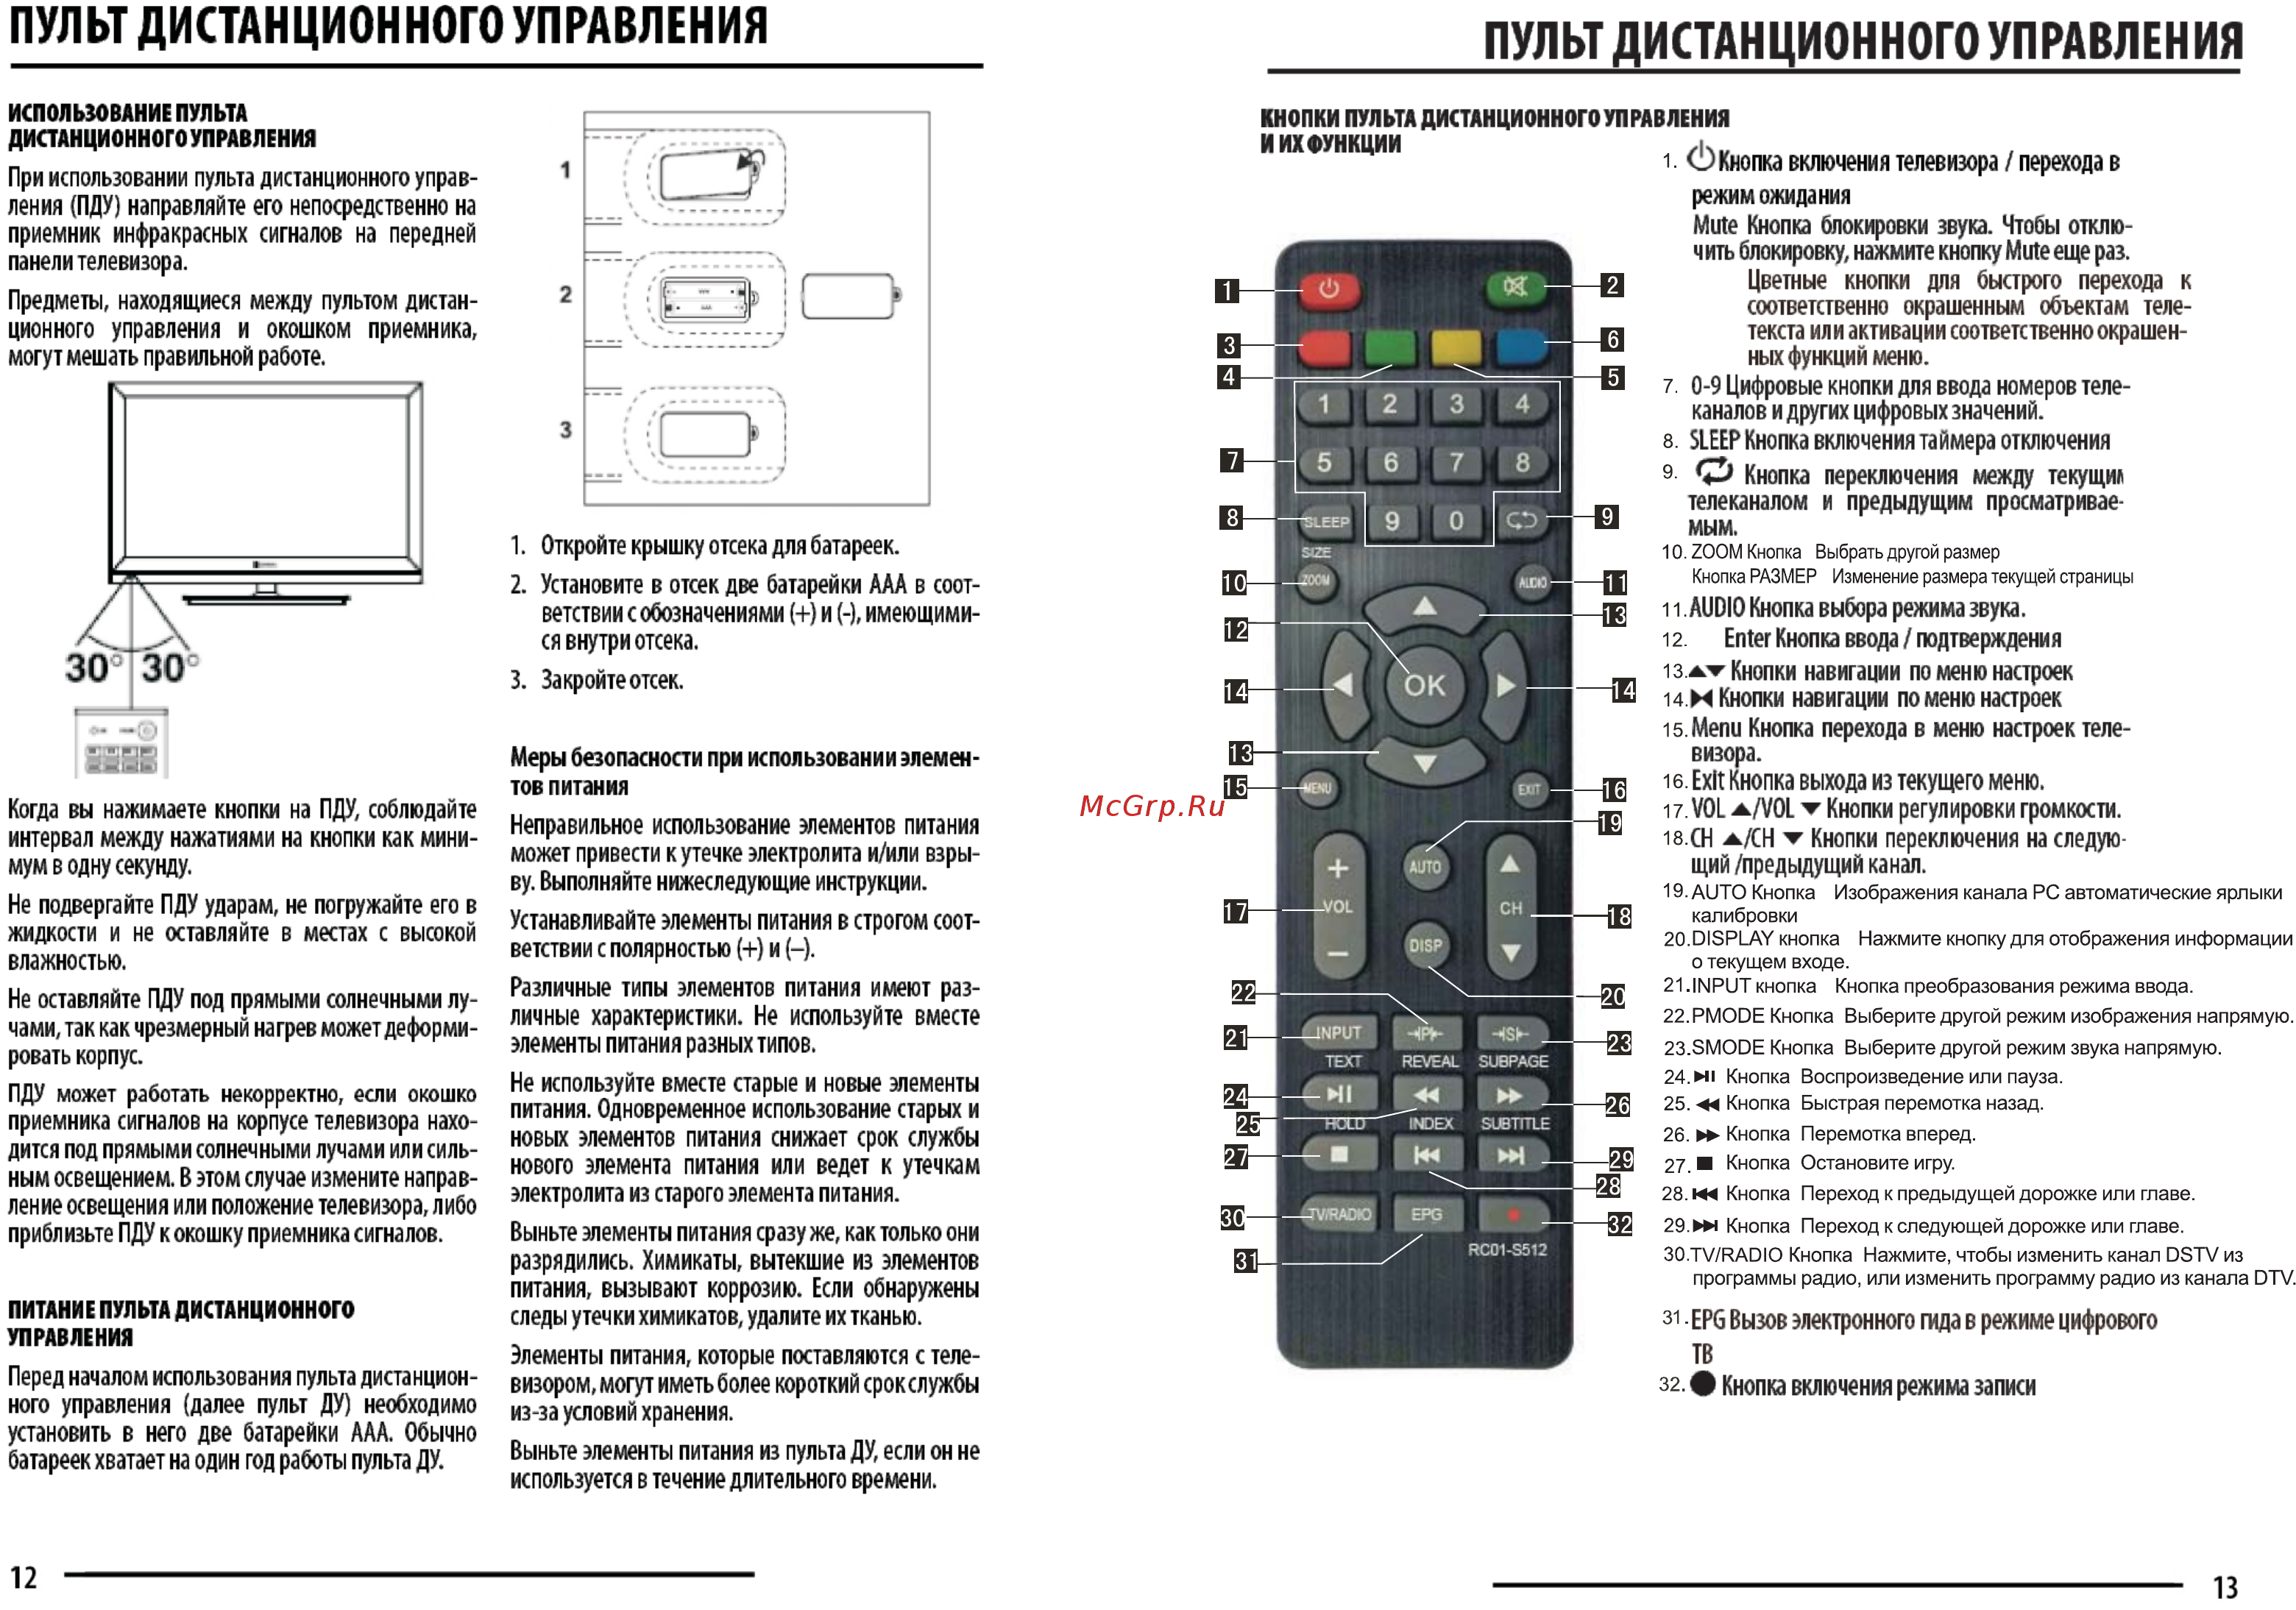 Mi remote controller (mi пульт)